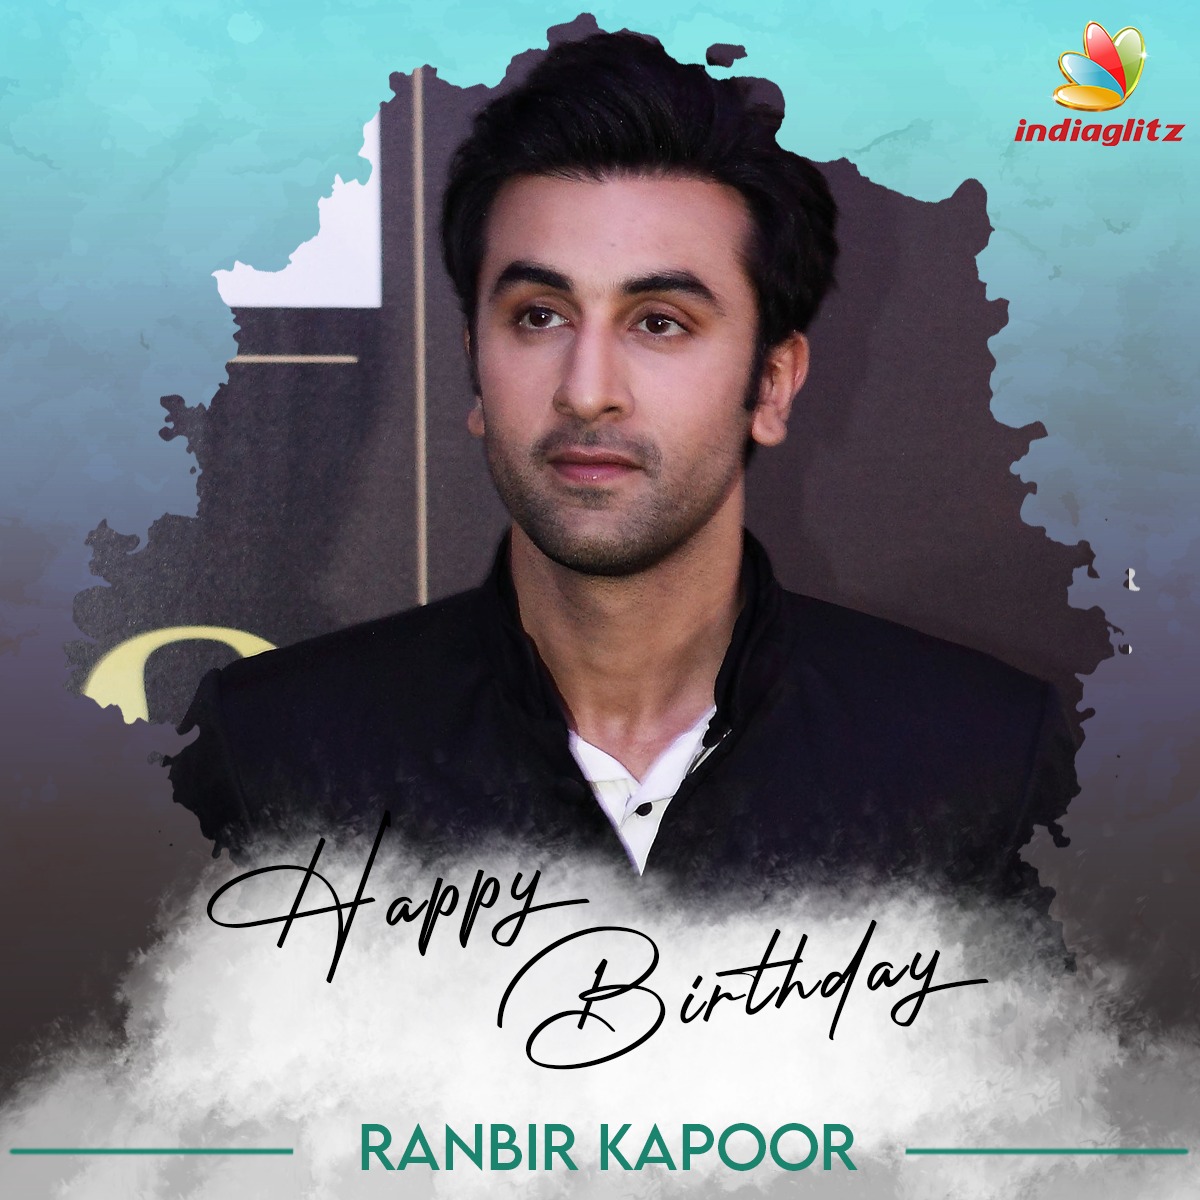 Wishing Actor Ranbir Kapoor a Very Happy Birthday  